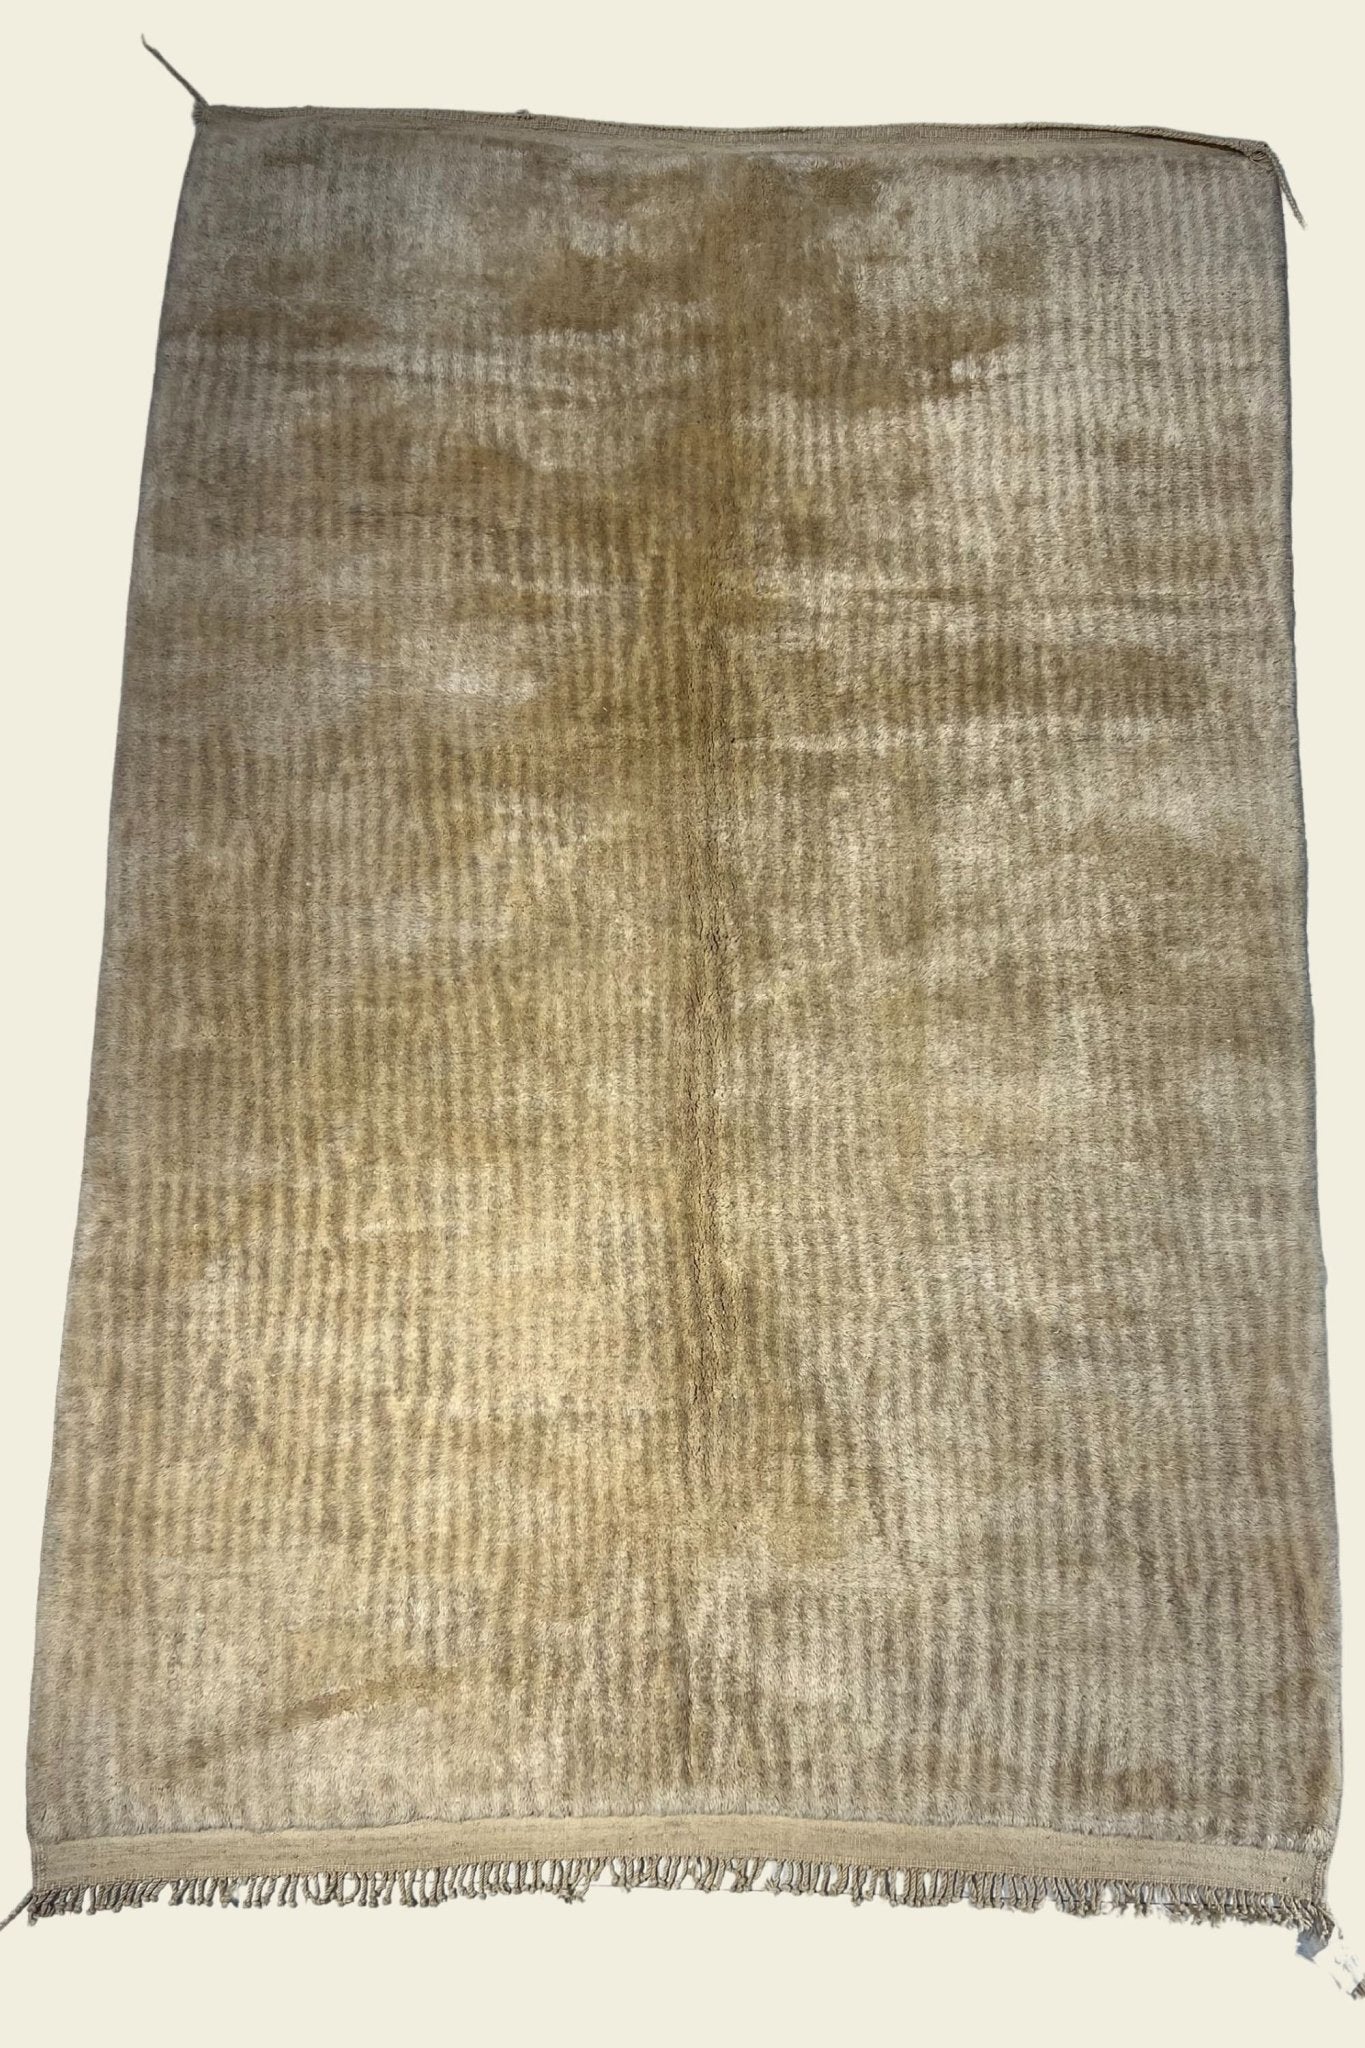 Contemporary Beni Mrirt Berber Rug 6'16" x 9'18" - 188 cm x 280 cm (Wool) - Dar Bouchaib Marrakech